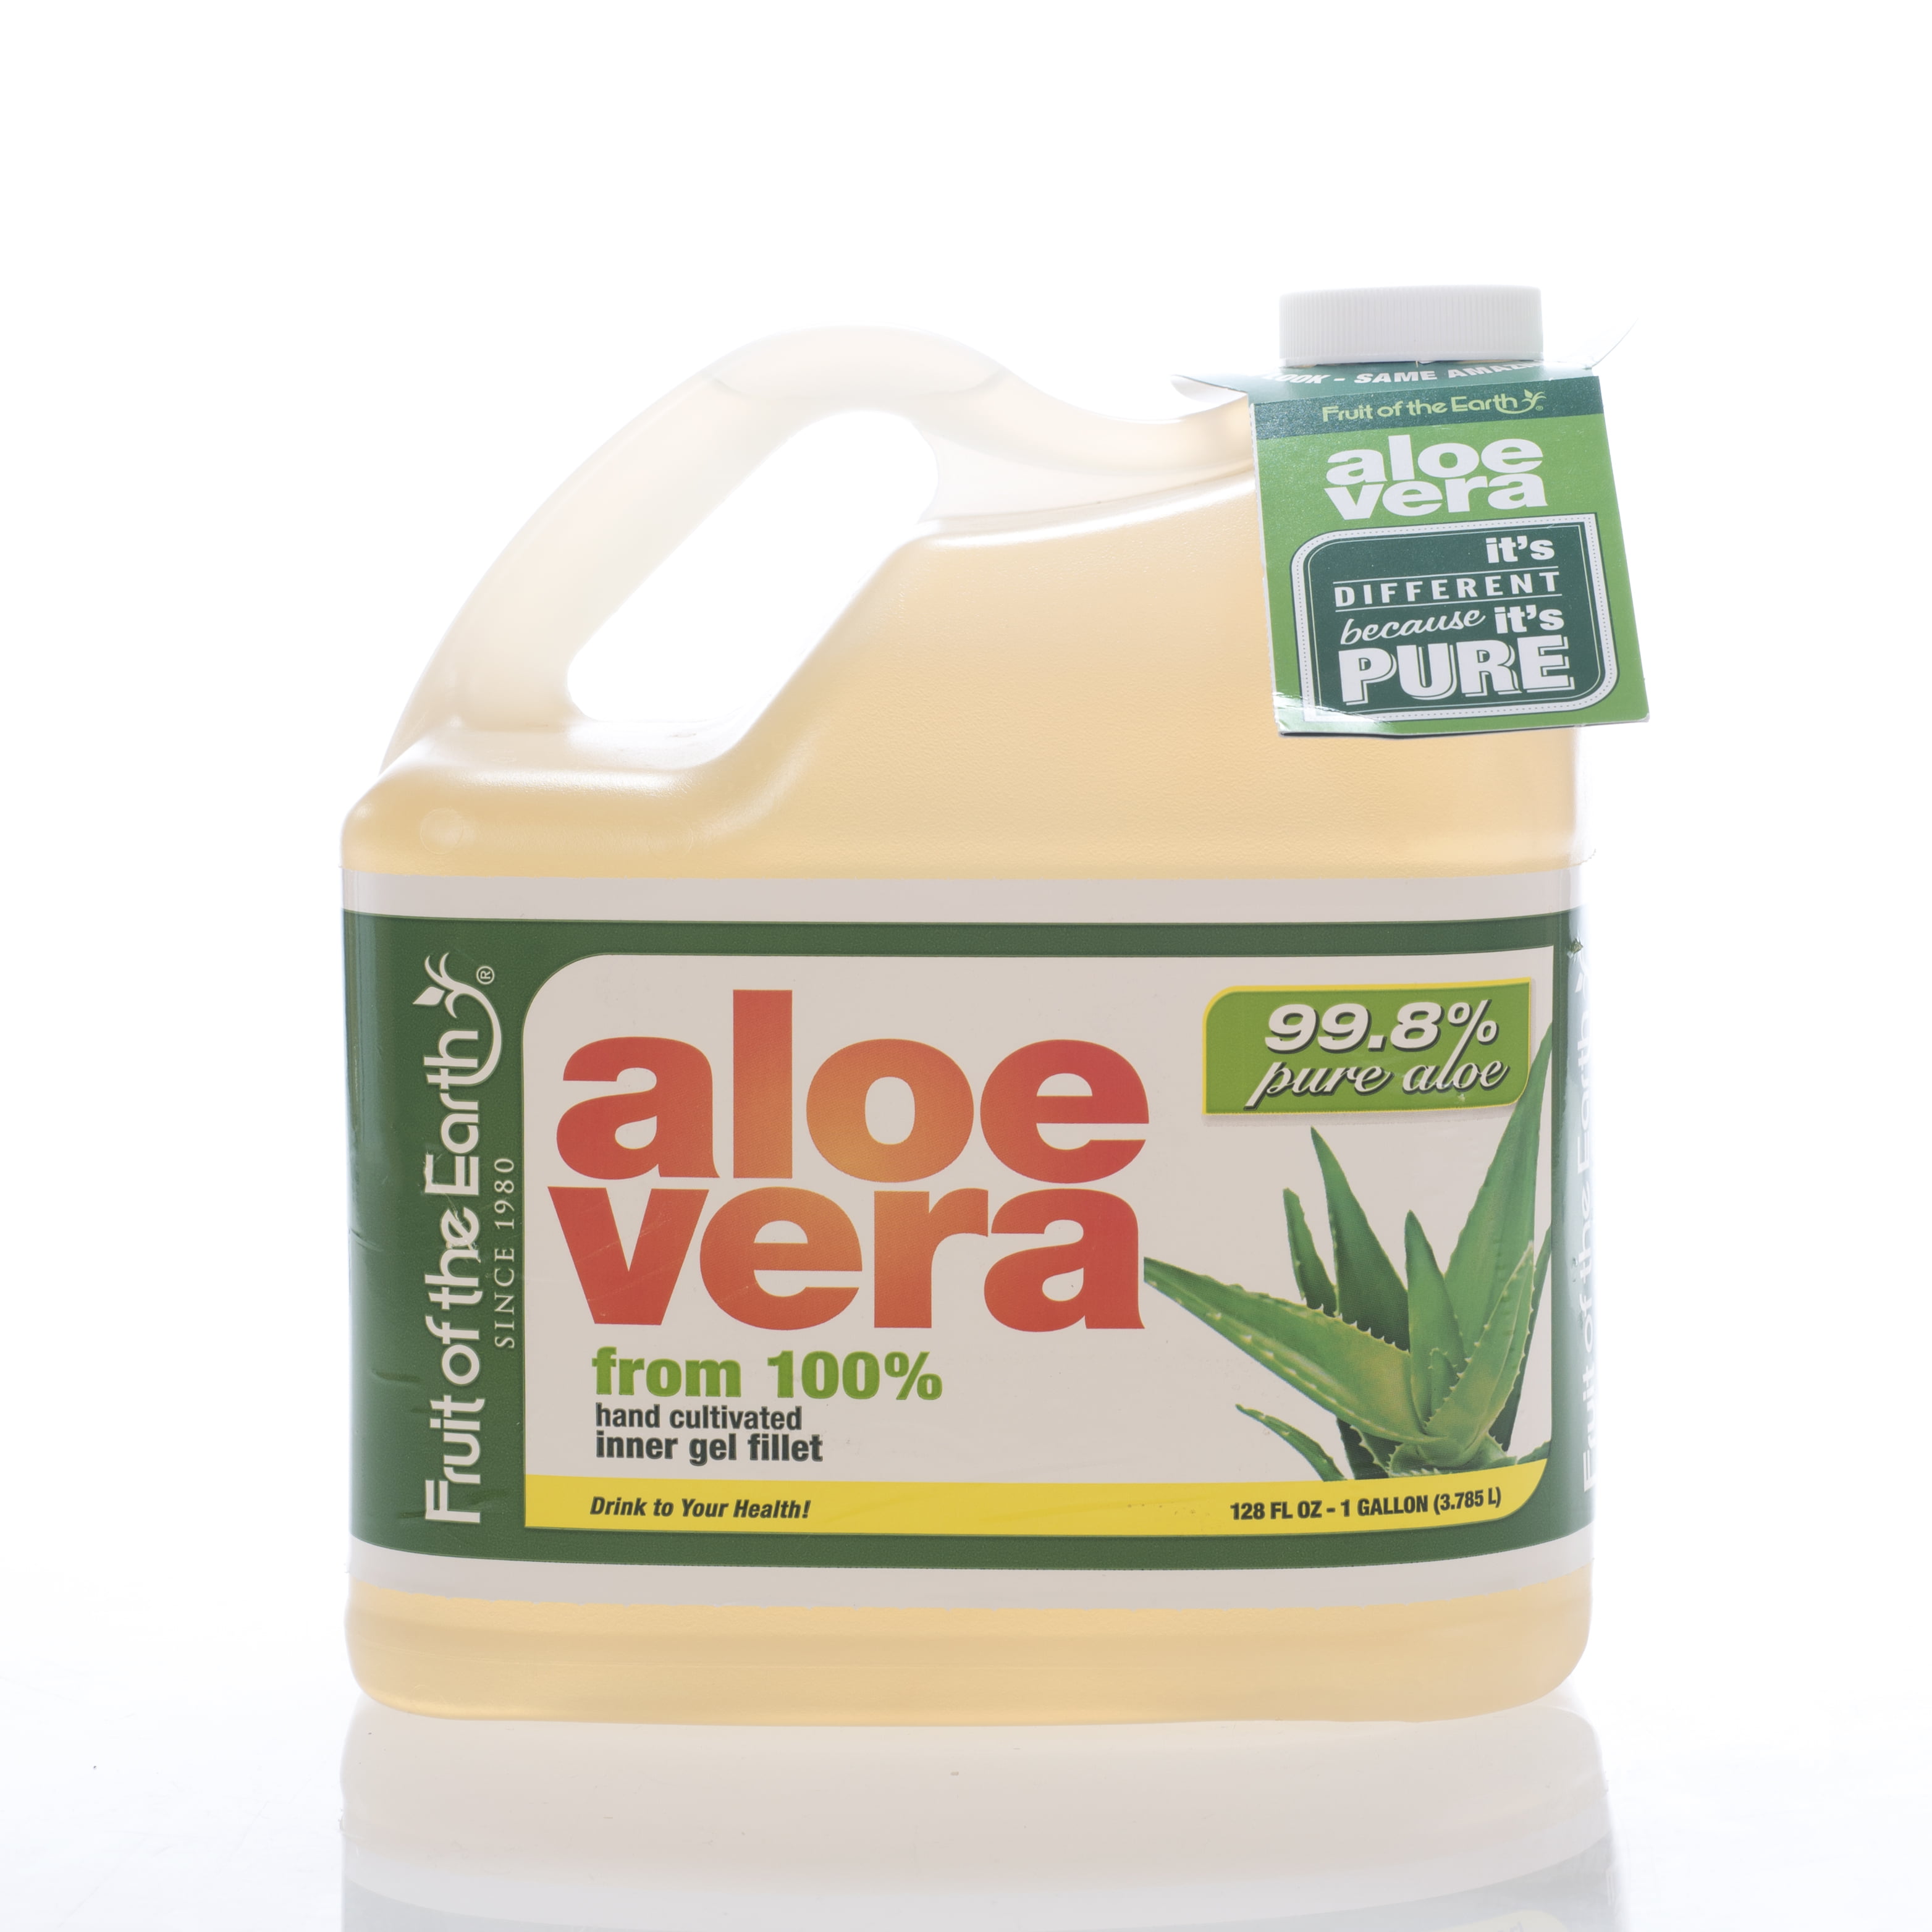 no evidence of aloe vera found in the aloe vera at wal